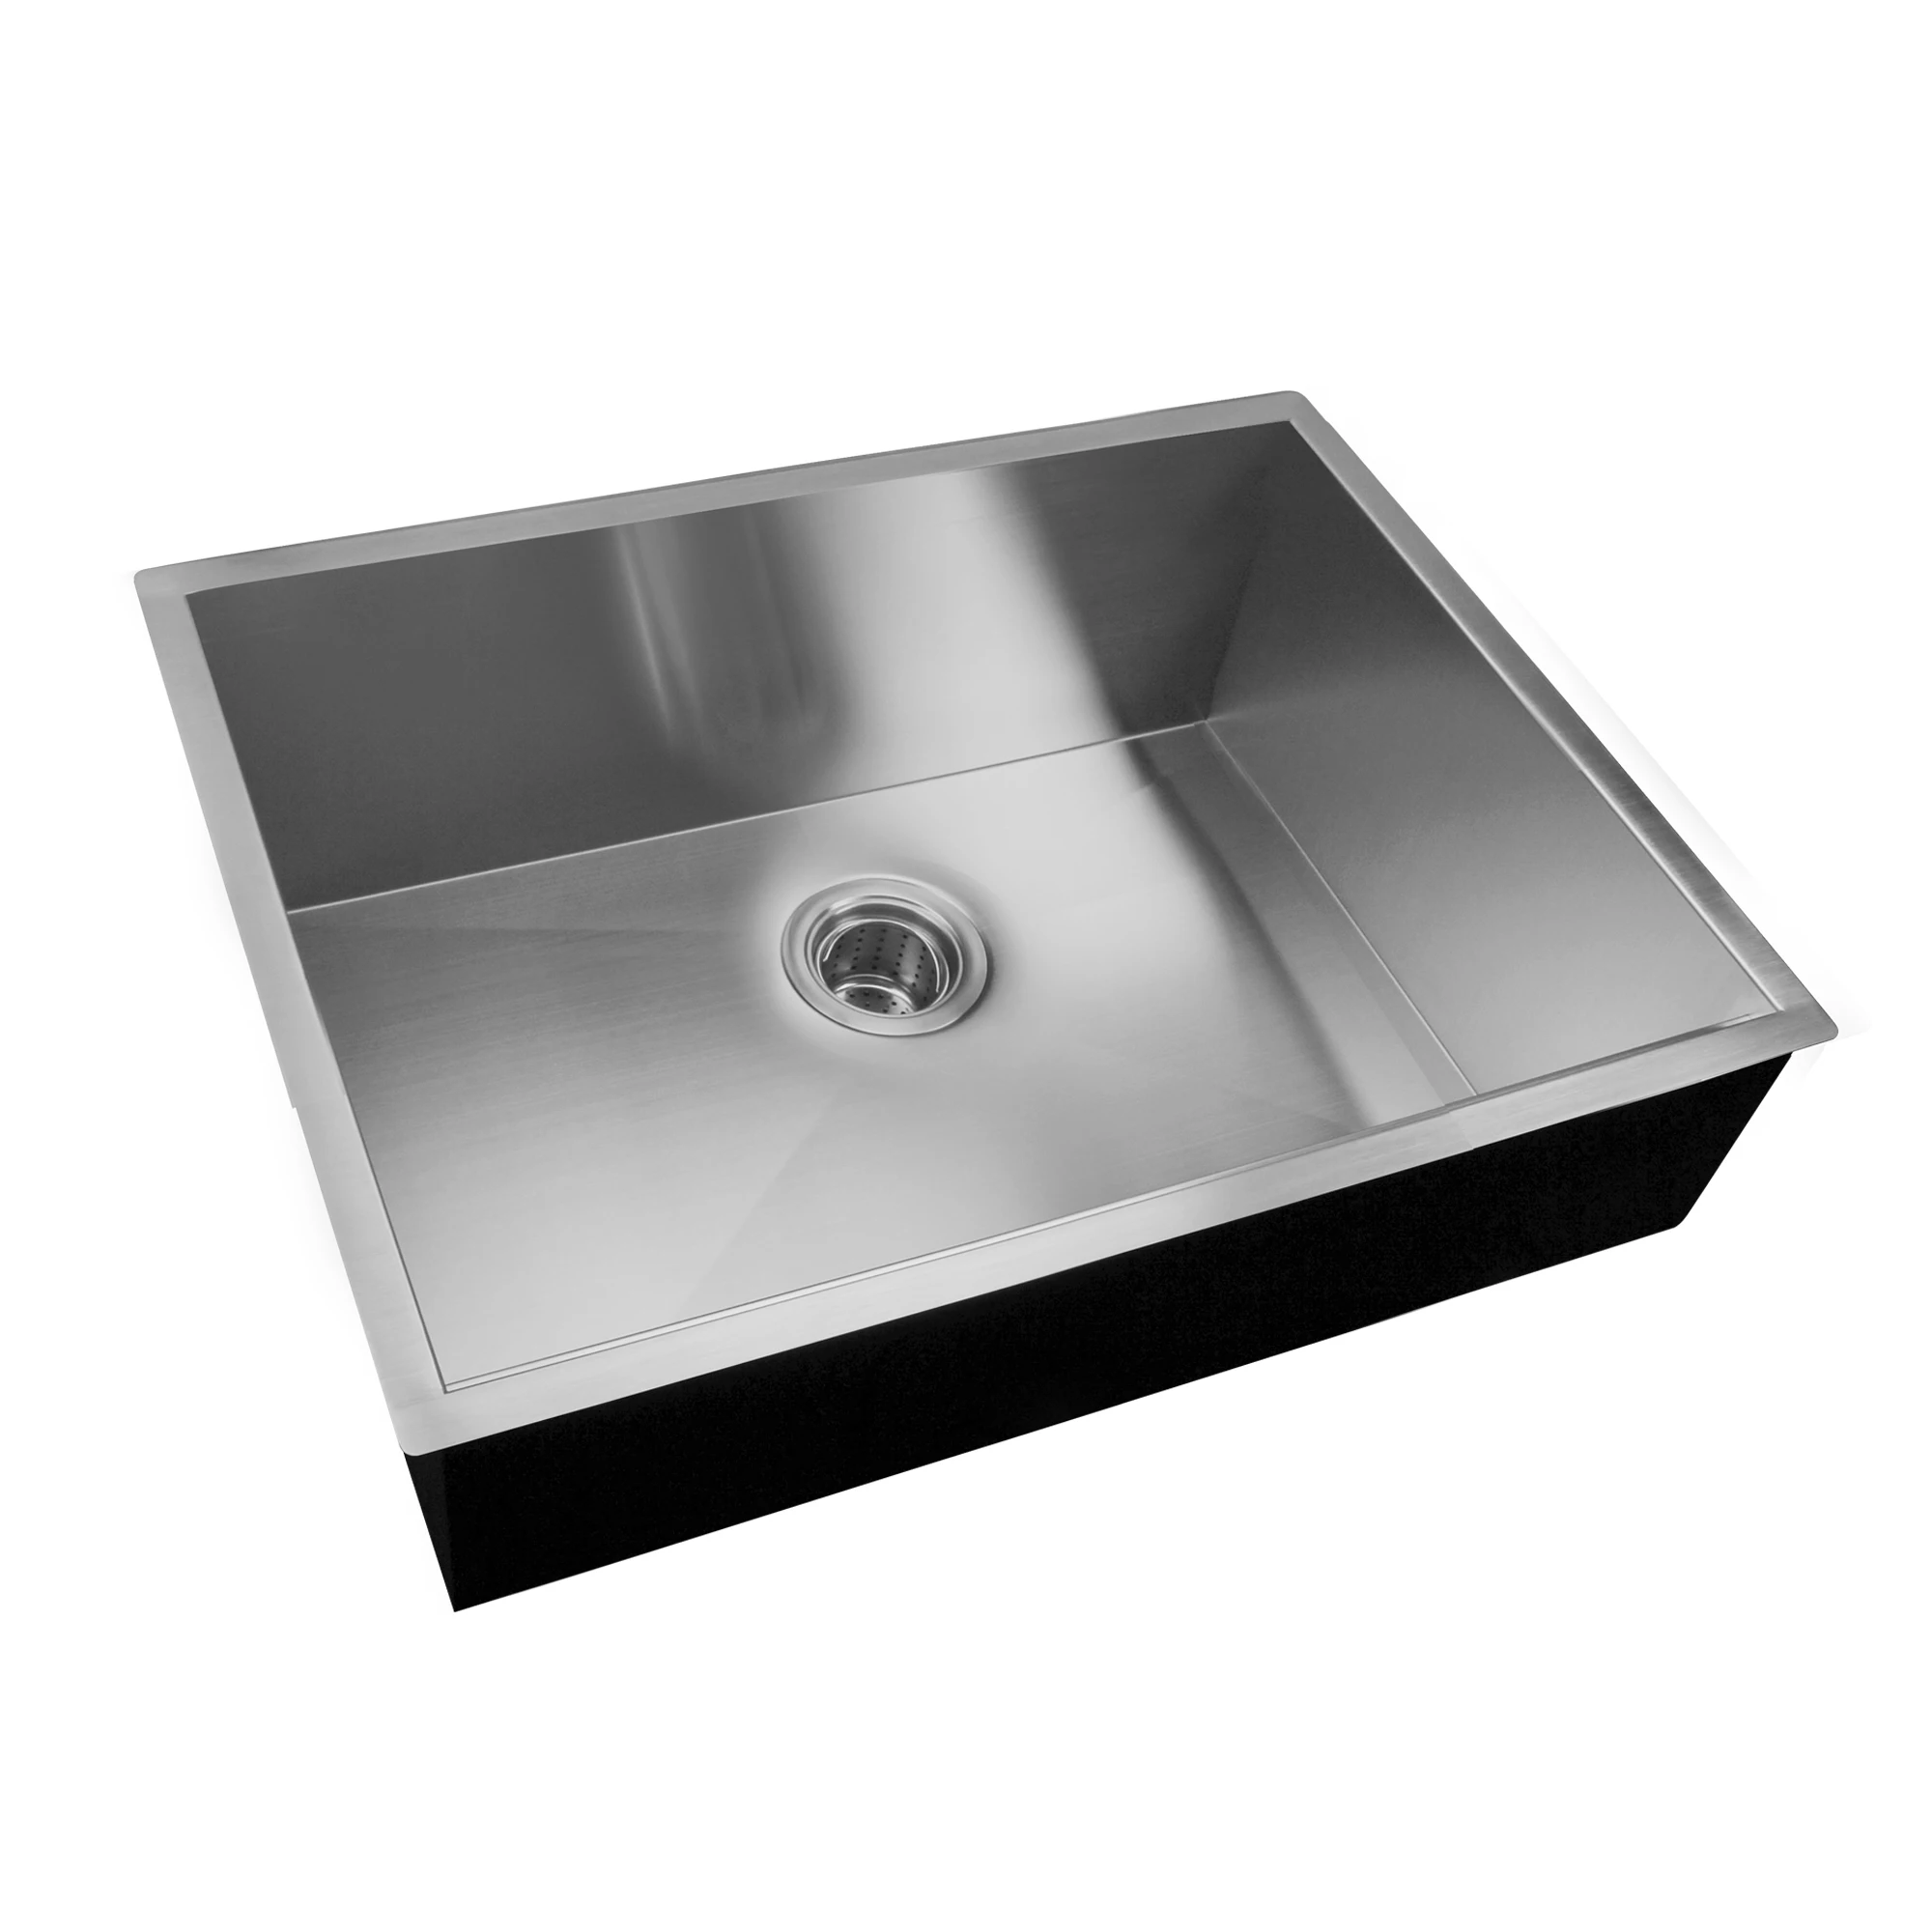 Aquacubic new design modern farm single bowl kitchen sinks stainless steel